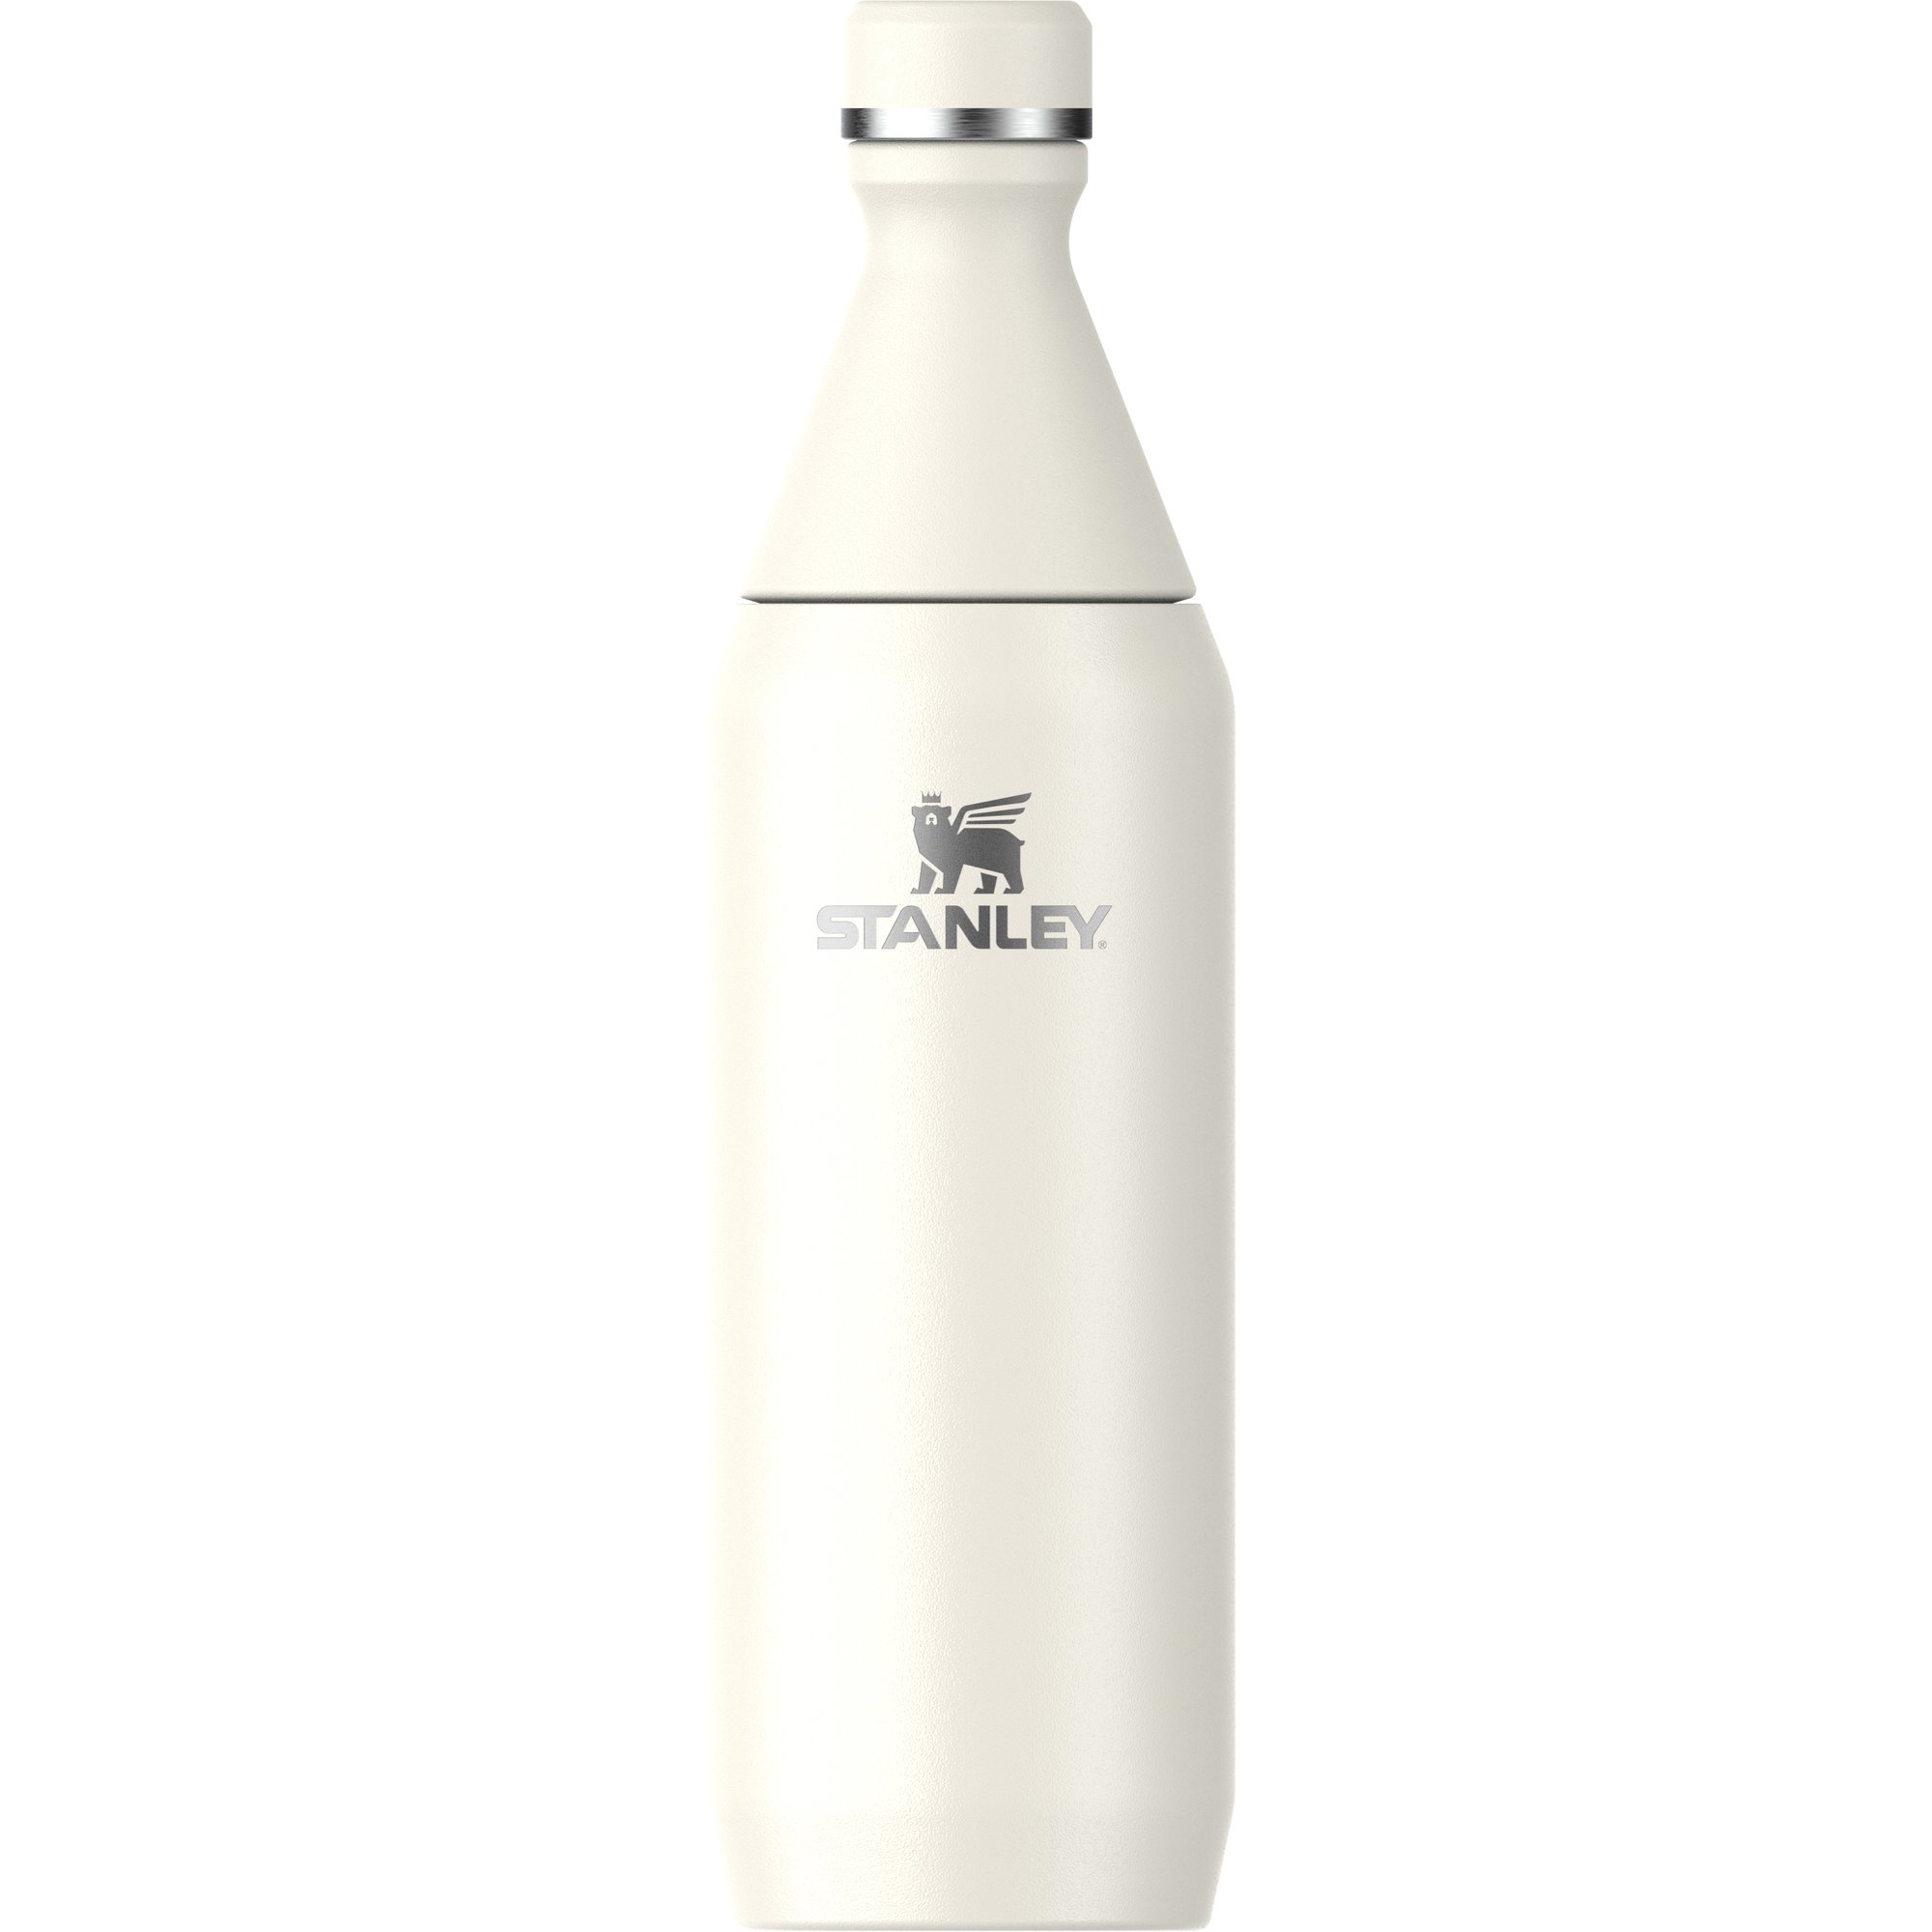 All Day Slim Bottle termoflaske 0.6 liter, cream Termoflaske